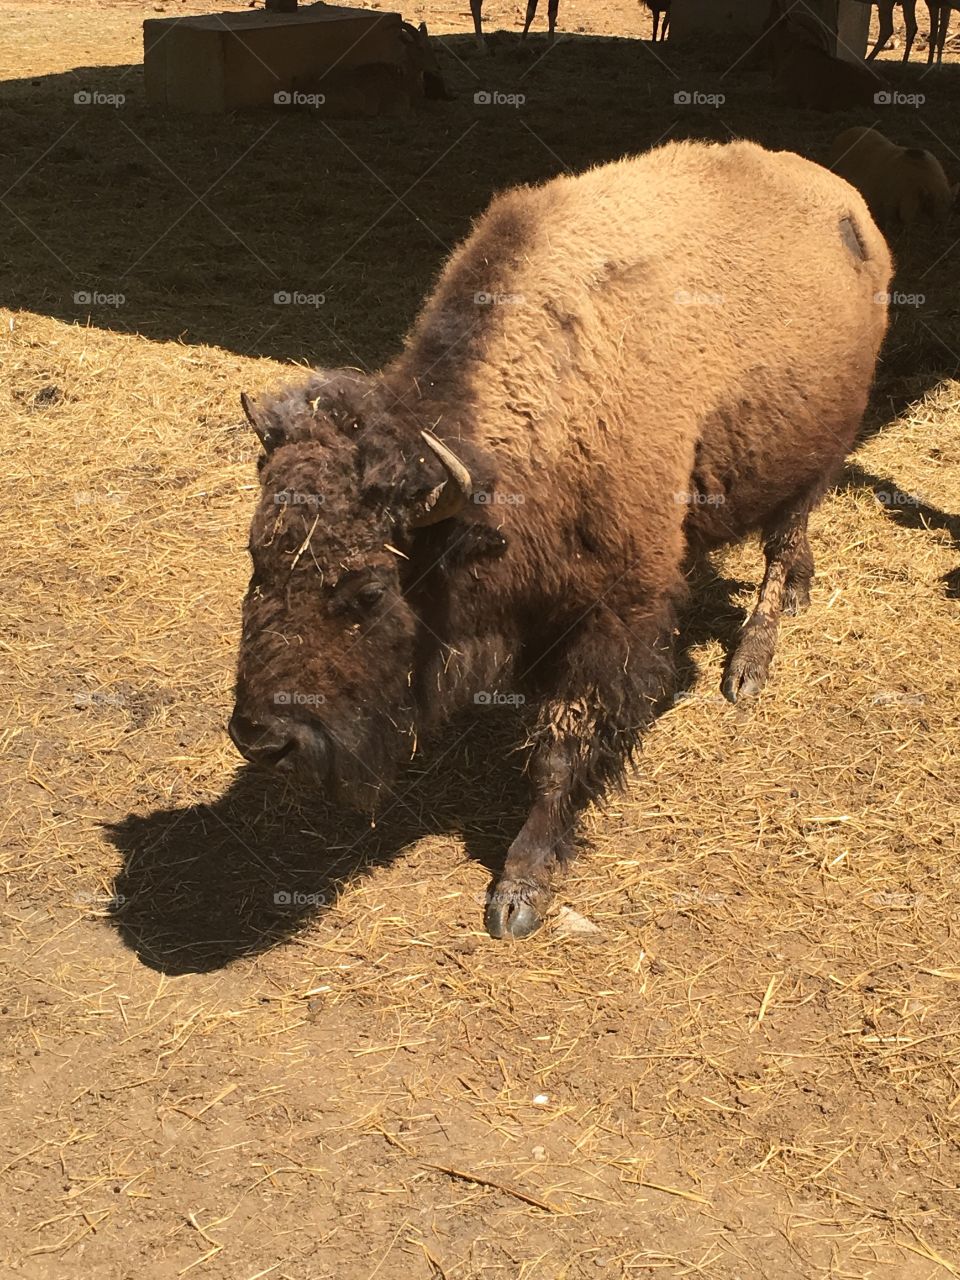 It's a bison!